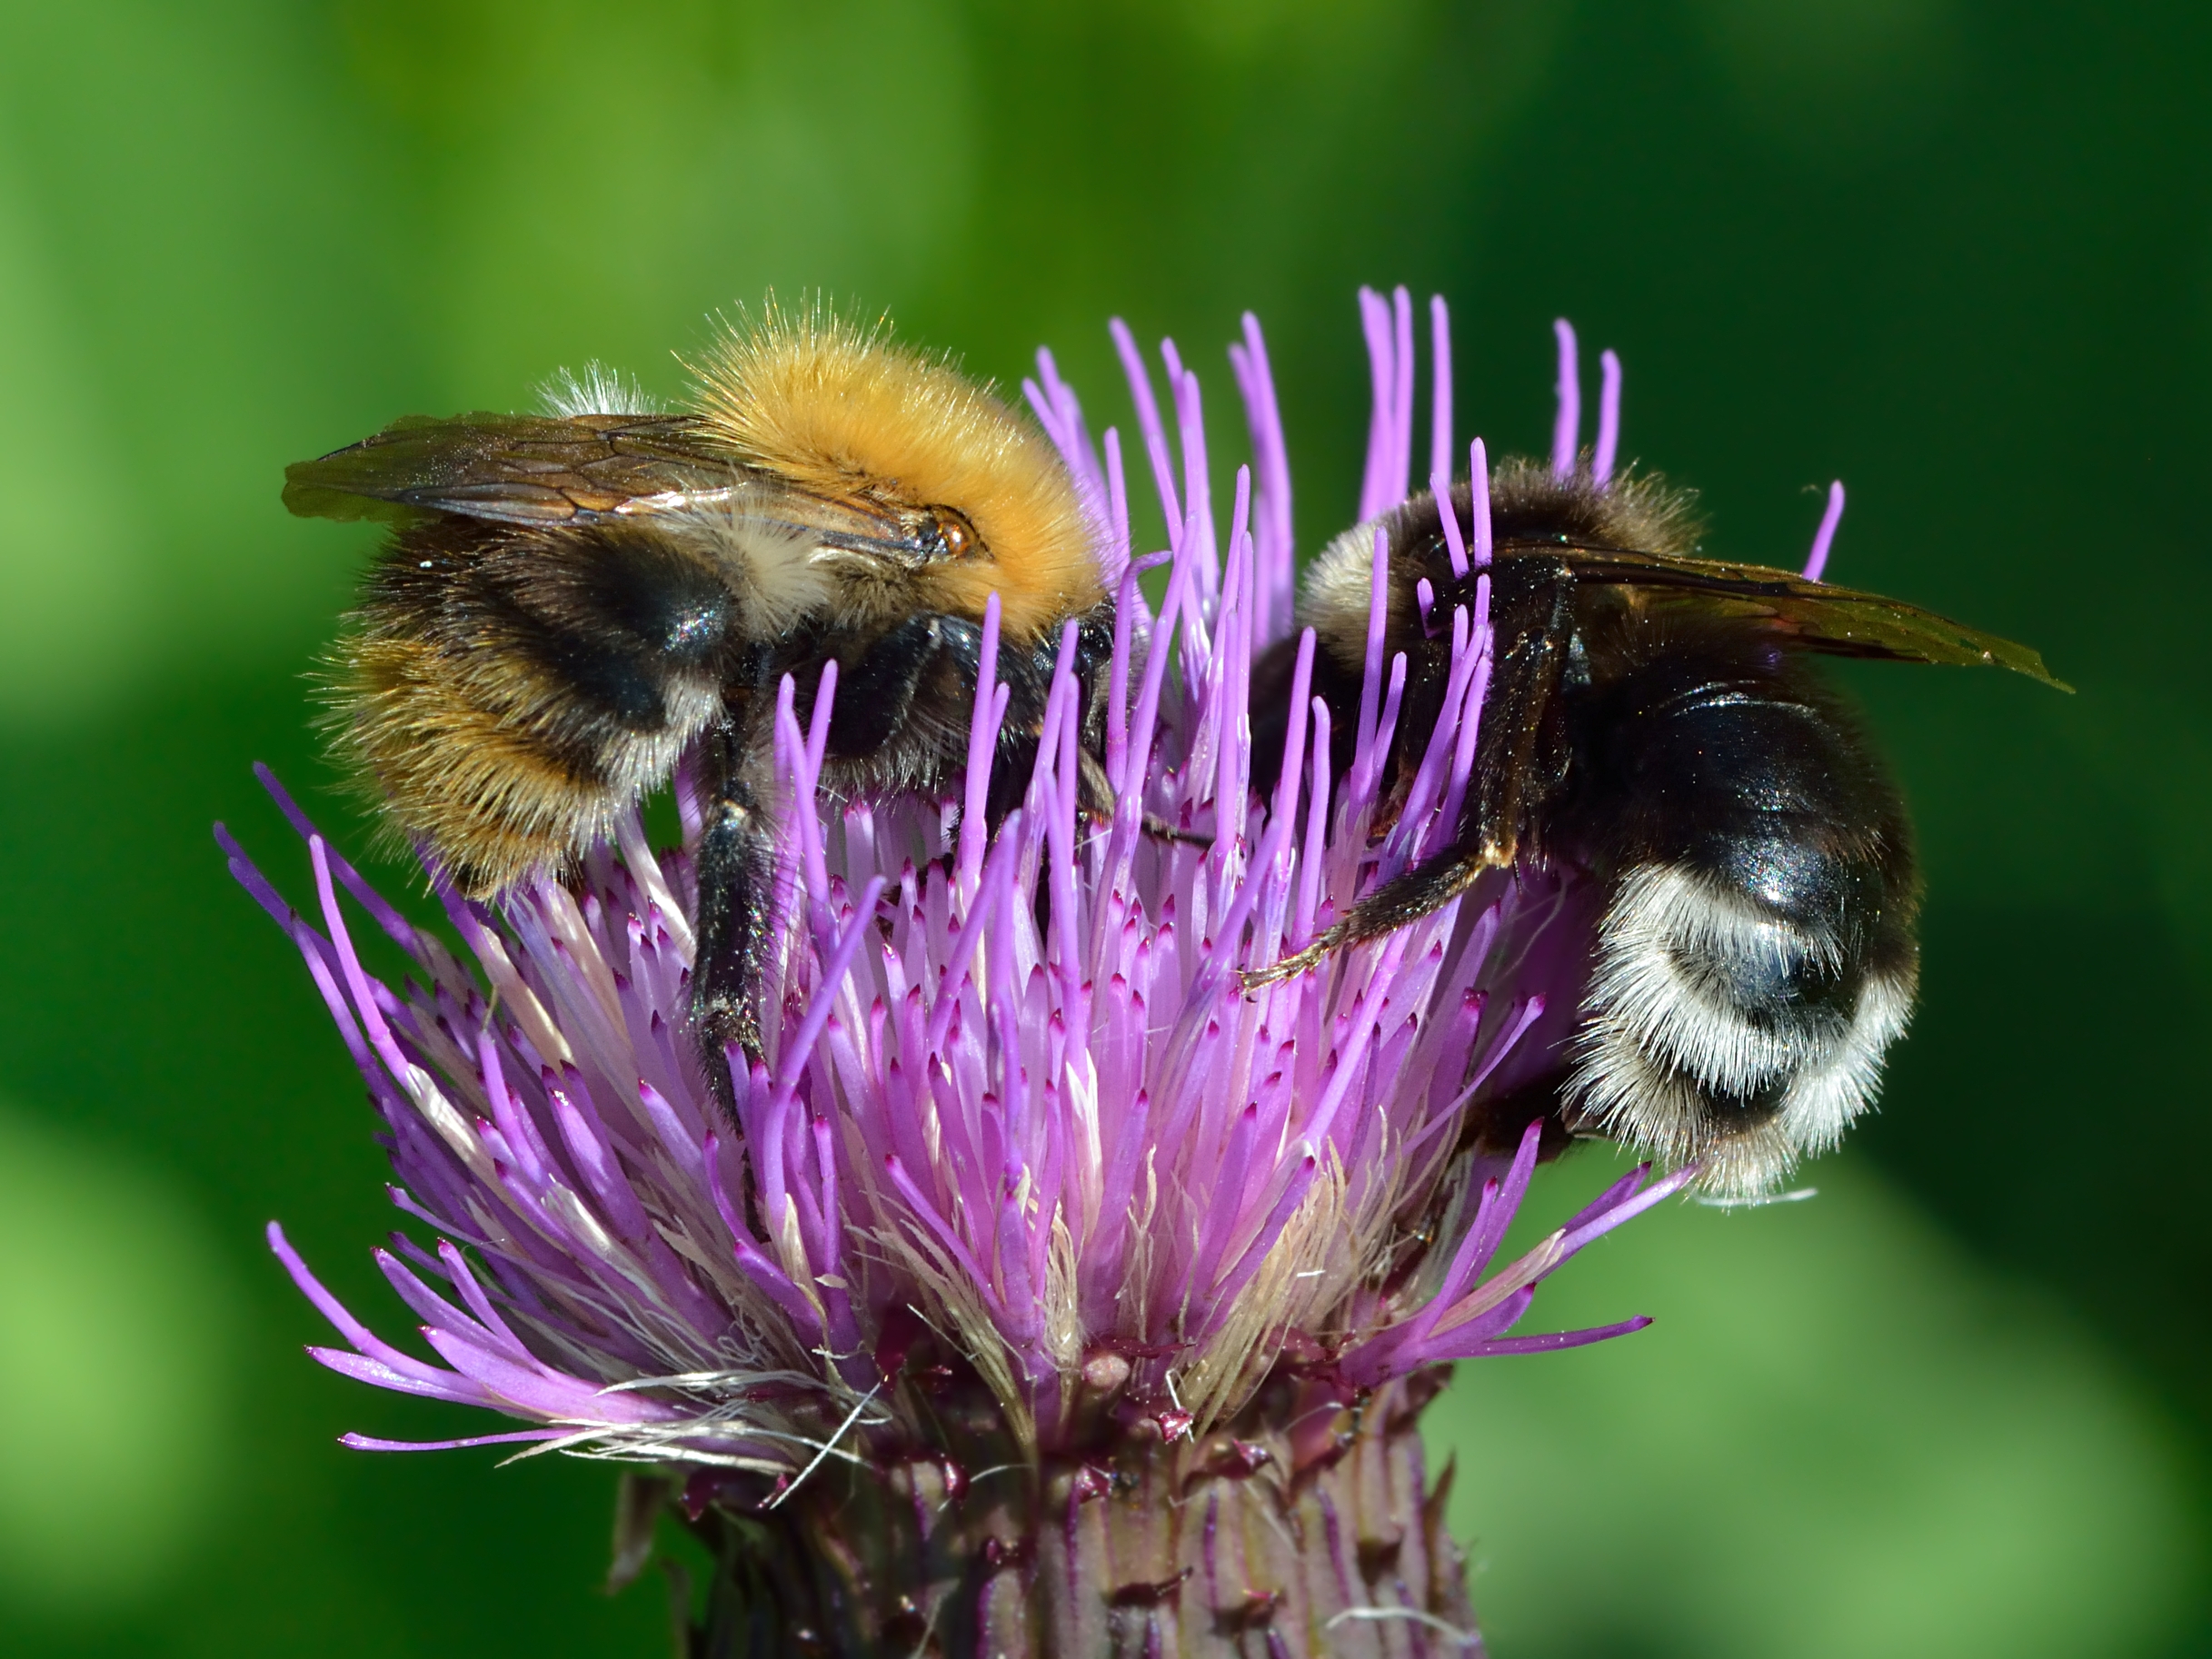 435075 descargar imagen animales, abeja, abejorro, abeja cardadora común, abejorro cuco gitano, cardo, insectos: fondos de pantalla y protectores de pantalla gratis